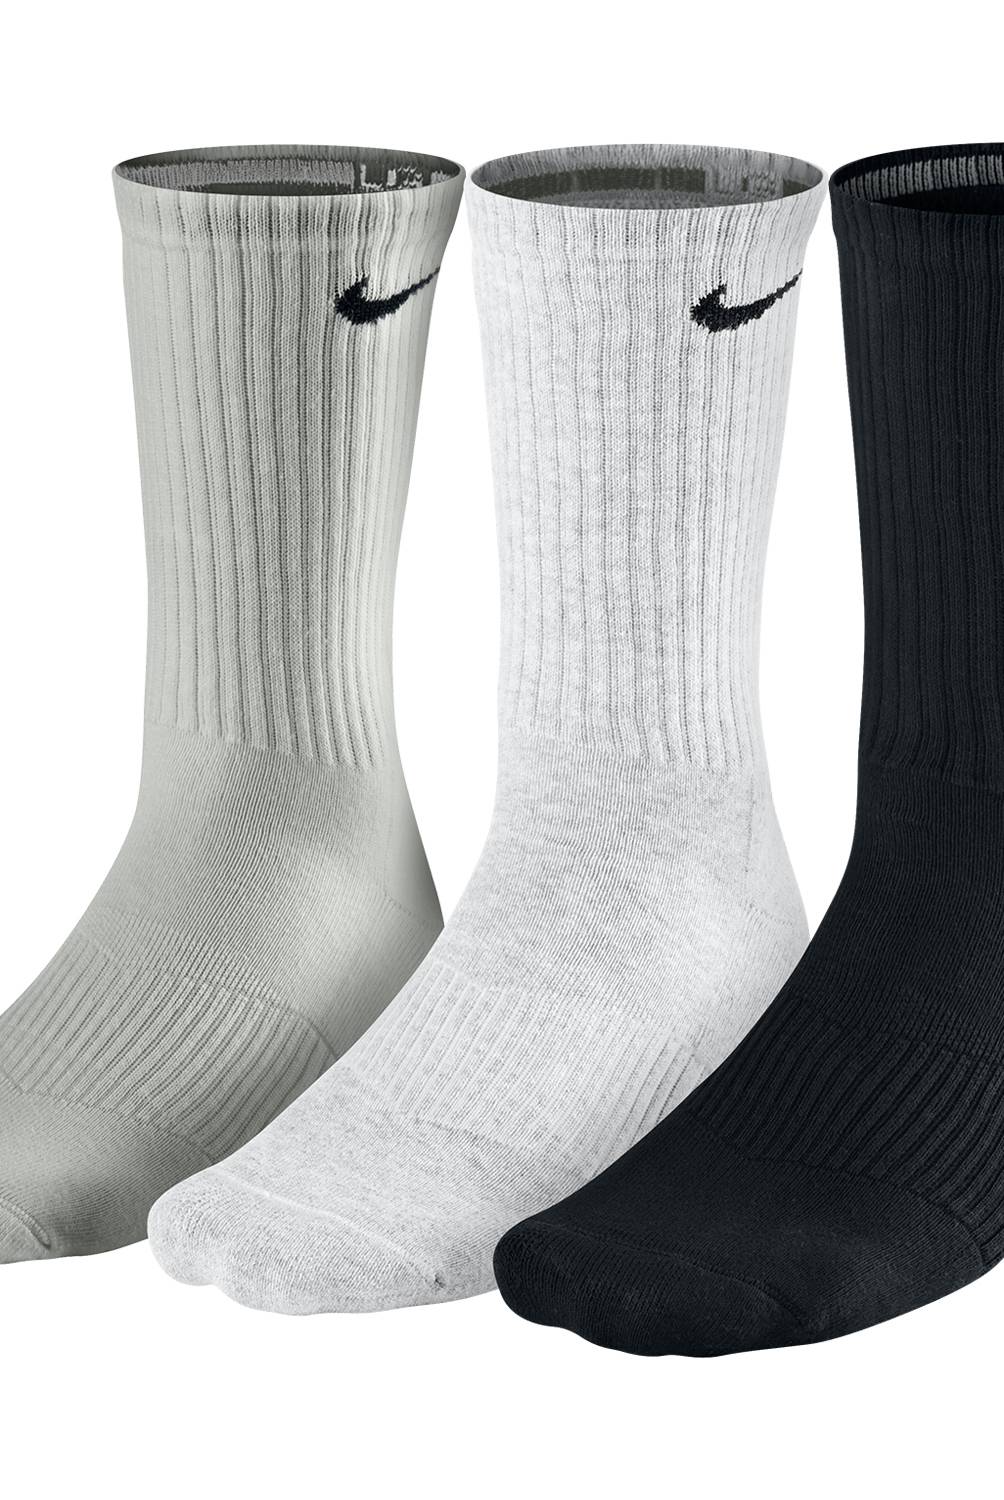 NIKE - Nike Pack De 3 Calcetines Largos Deportivos Hombre